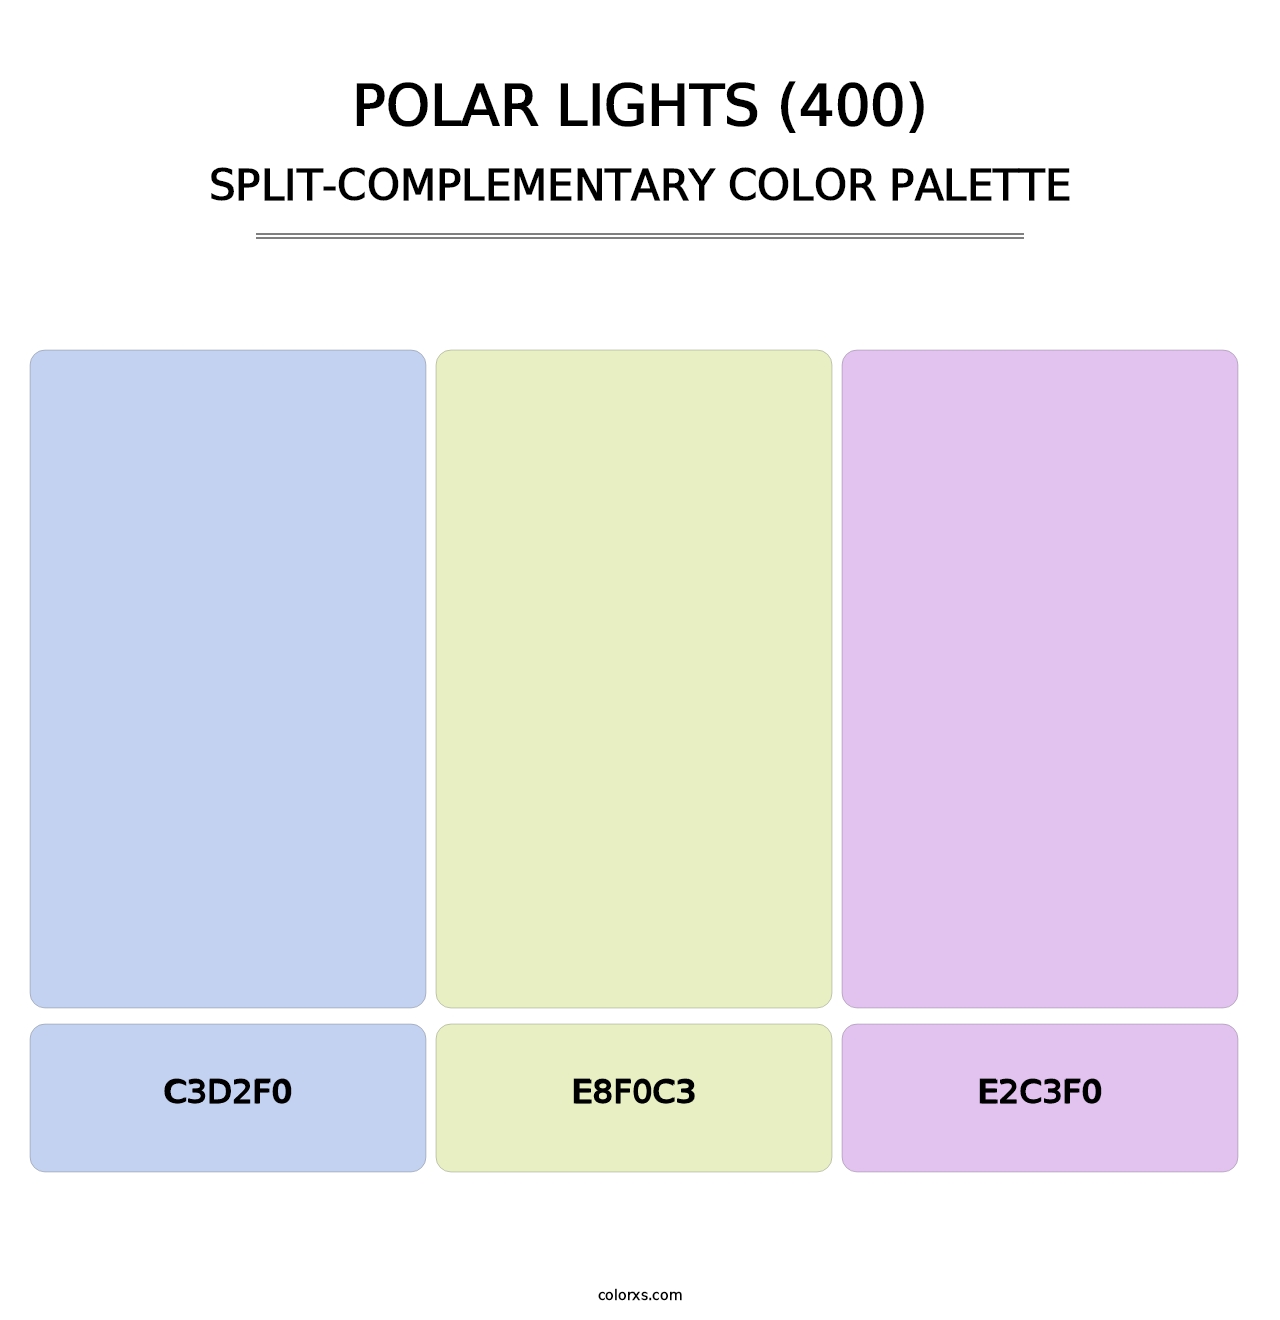 Polar Lights (400) - Split-Complementary Color Palette